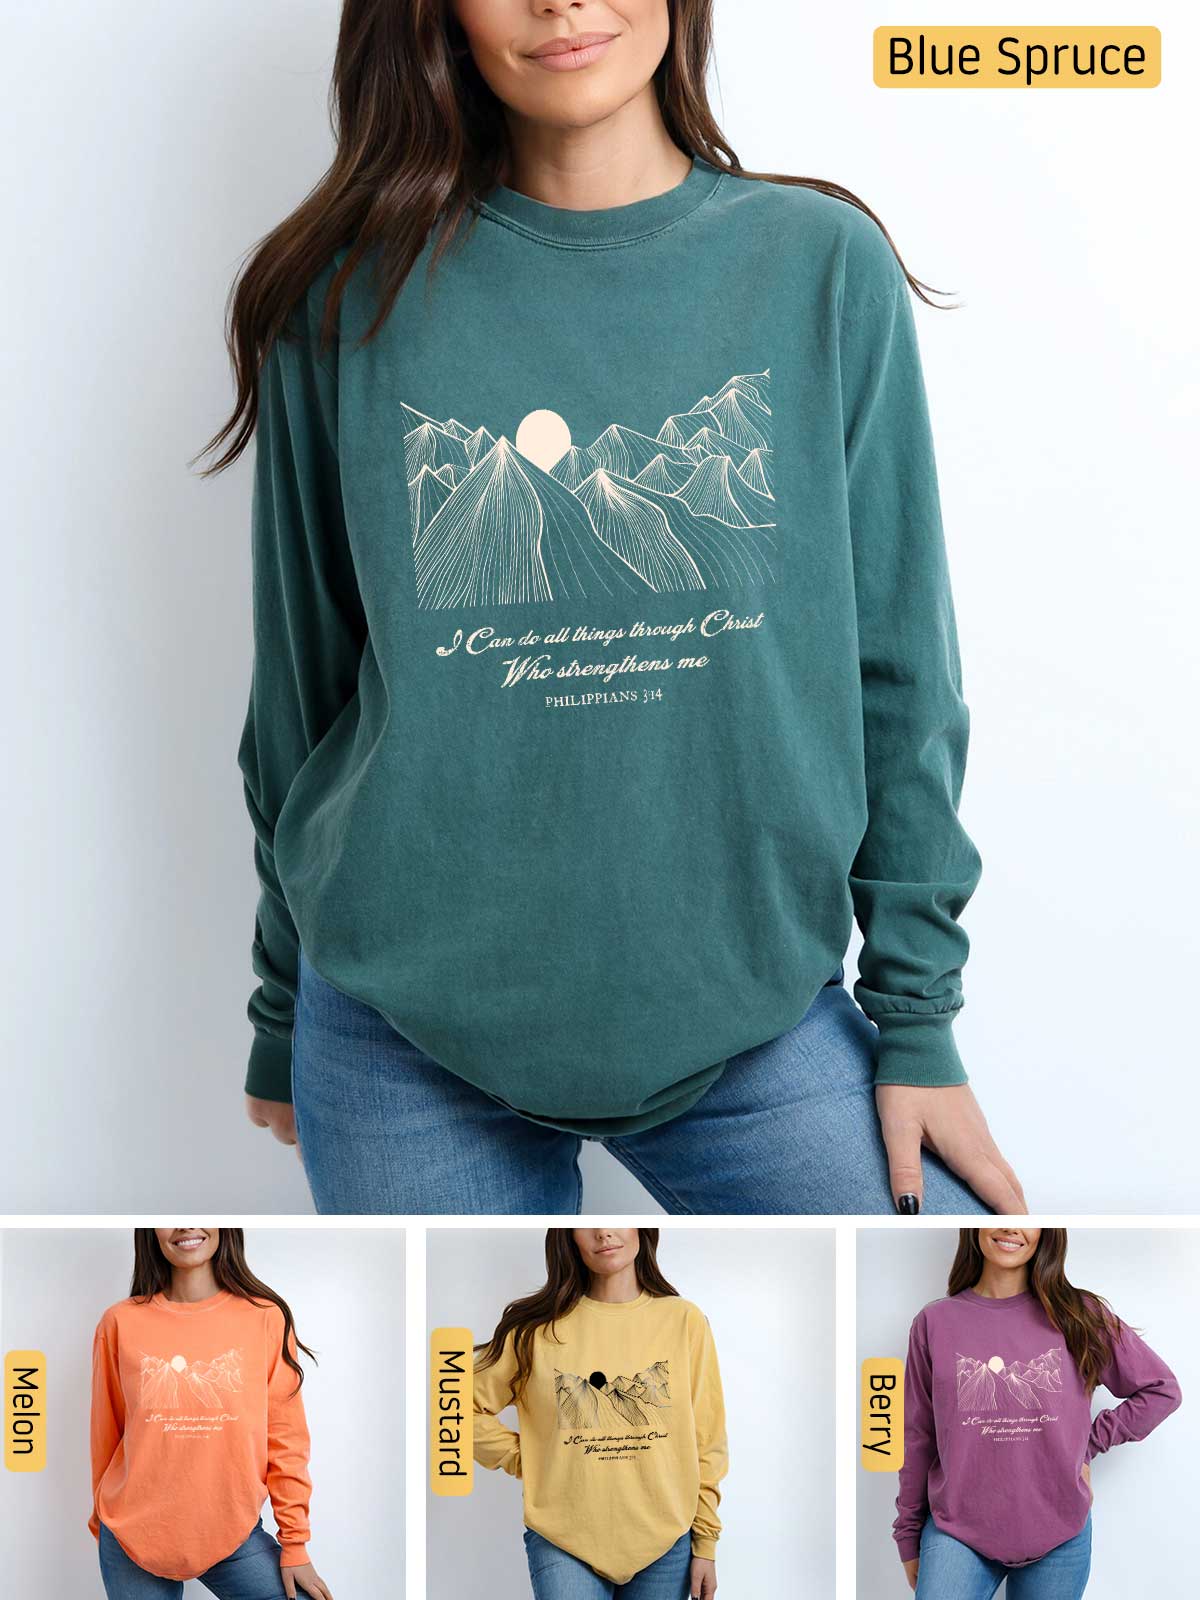 a woman wearing a sweatshirt with a mountain scene on it